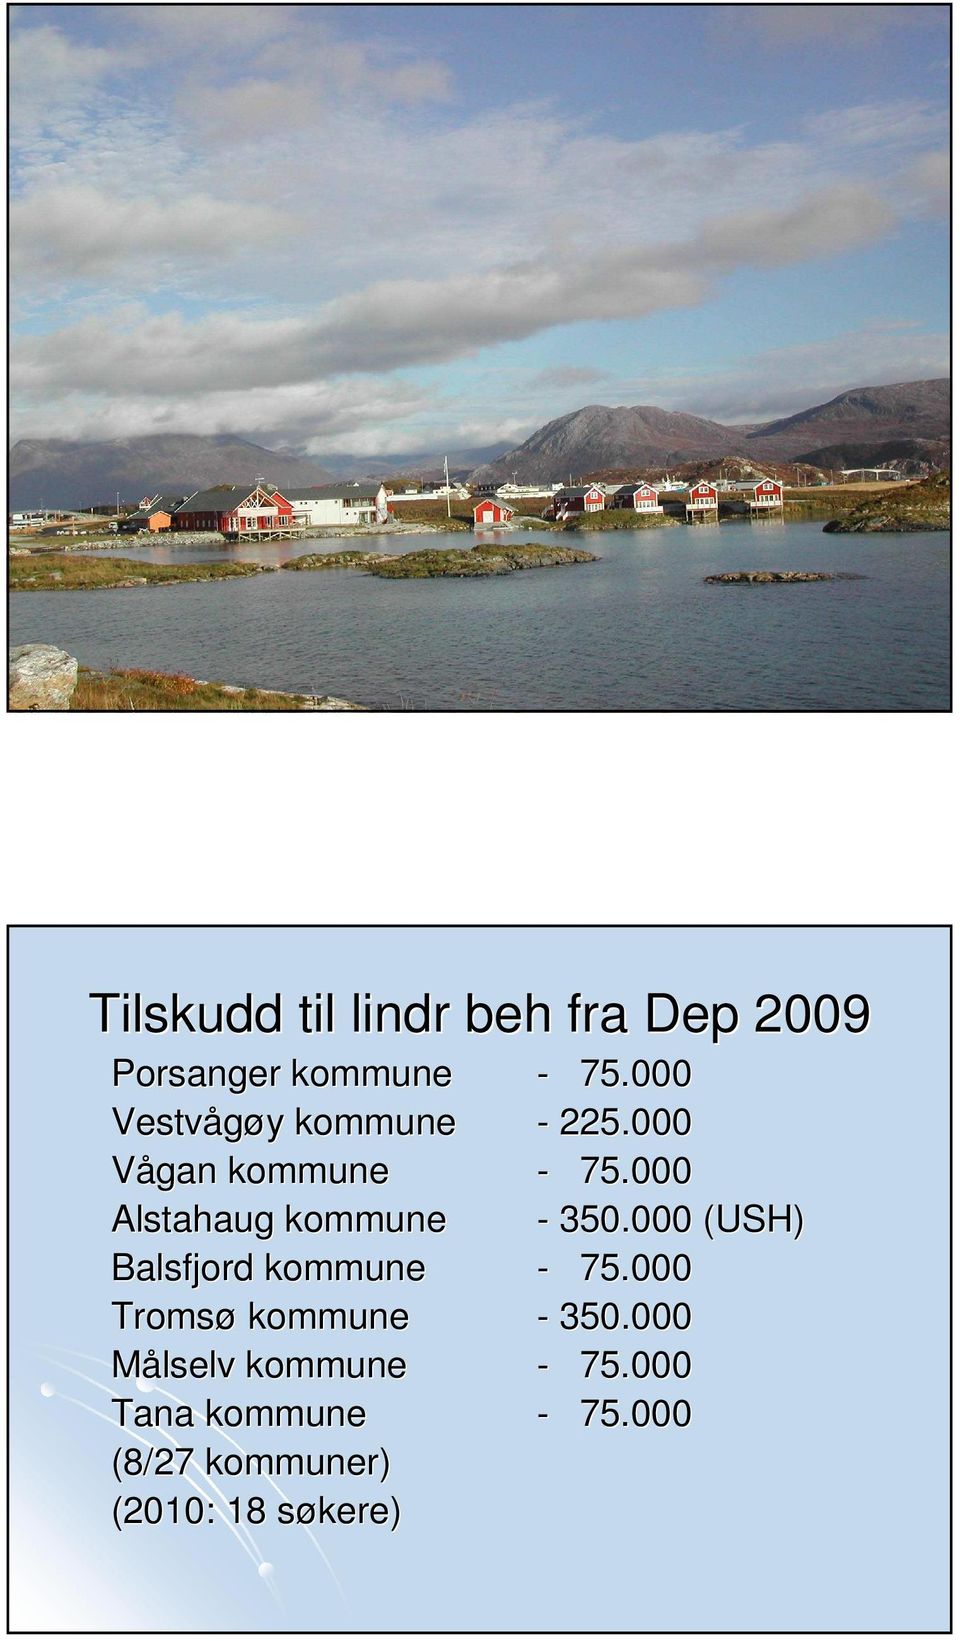 000 Alstahaug kommune - 350.000 (USH) Balsfjord kommune - 75.